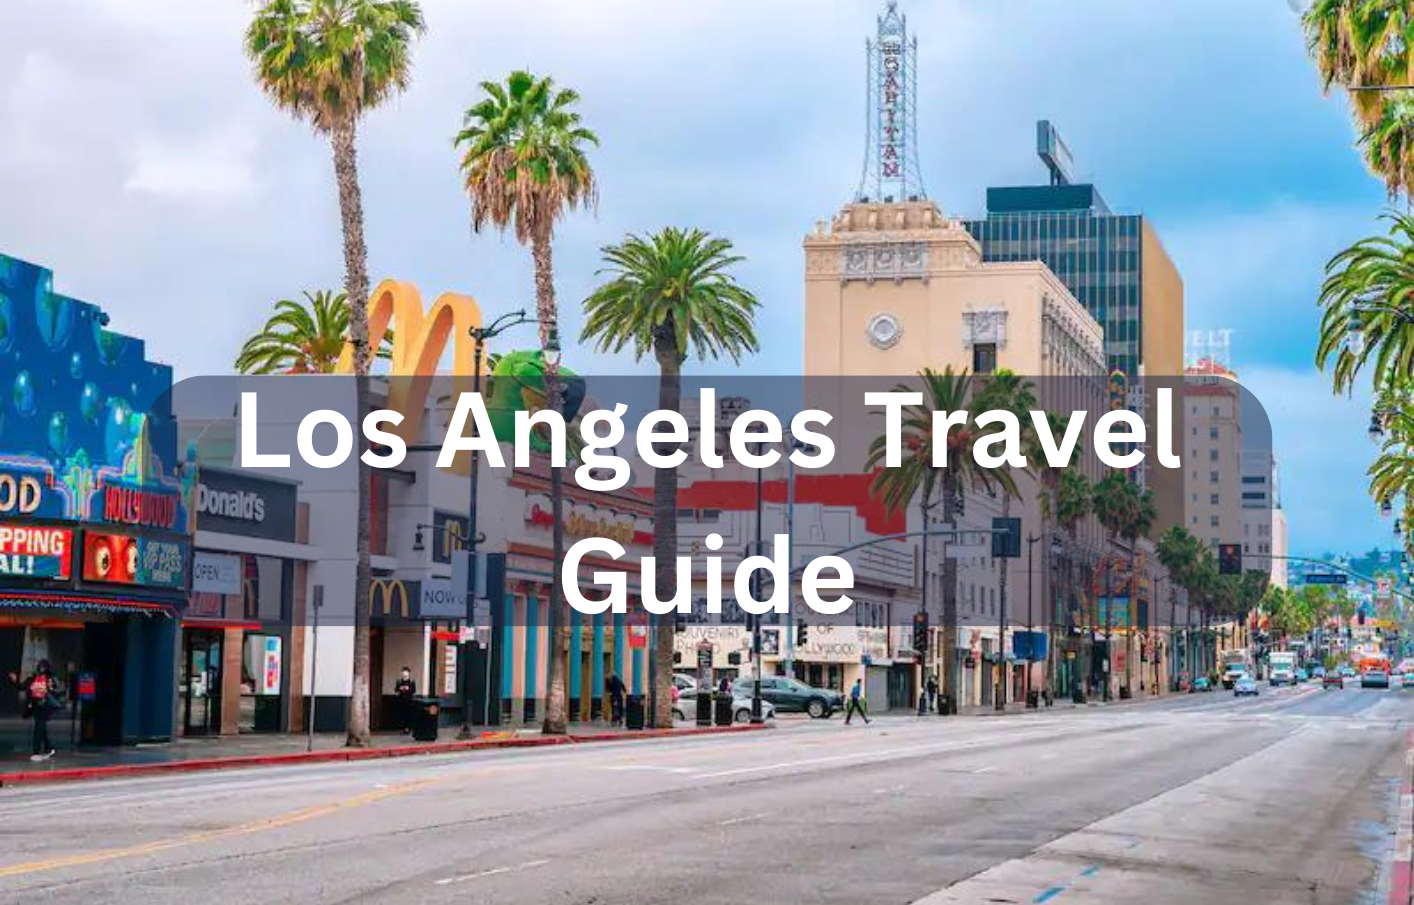 Los Angeles Guide